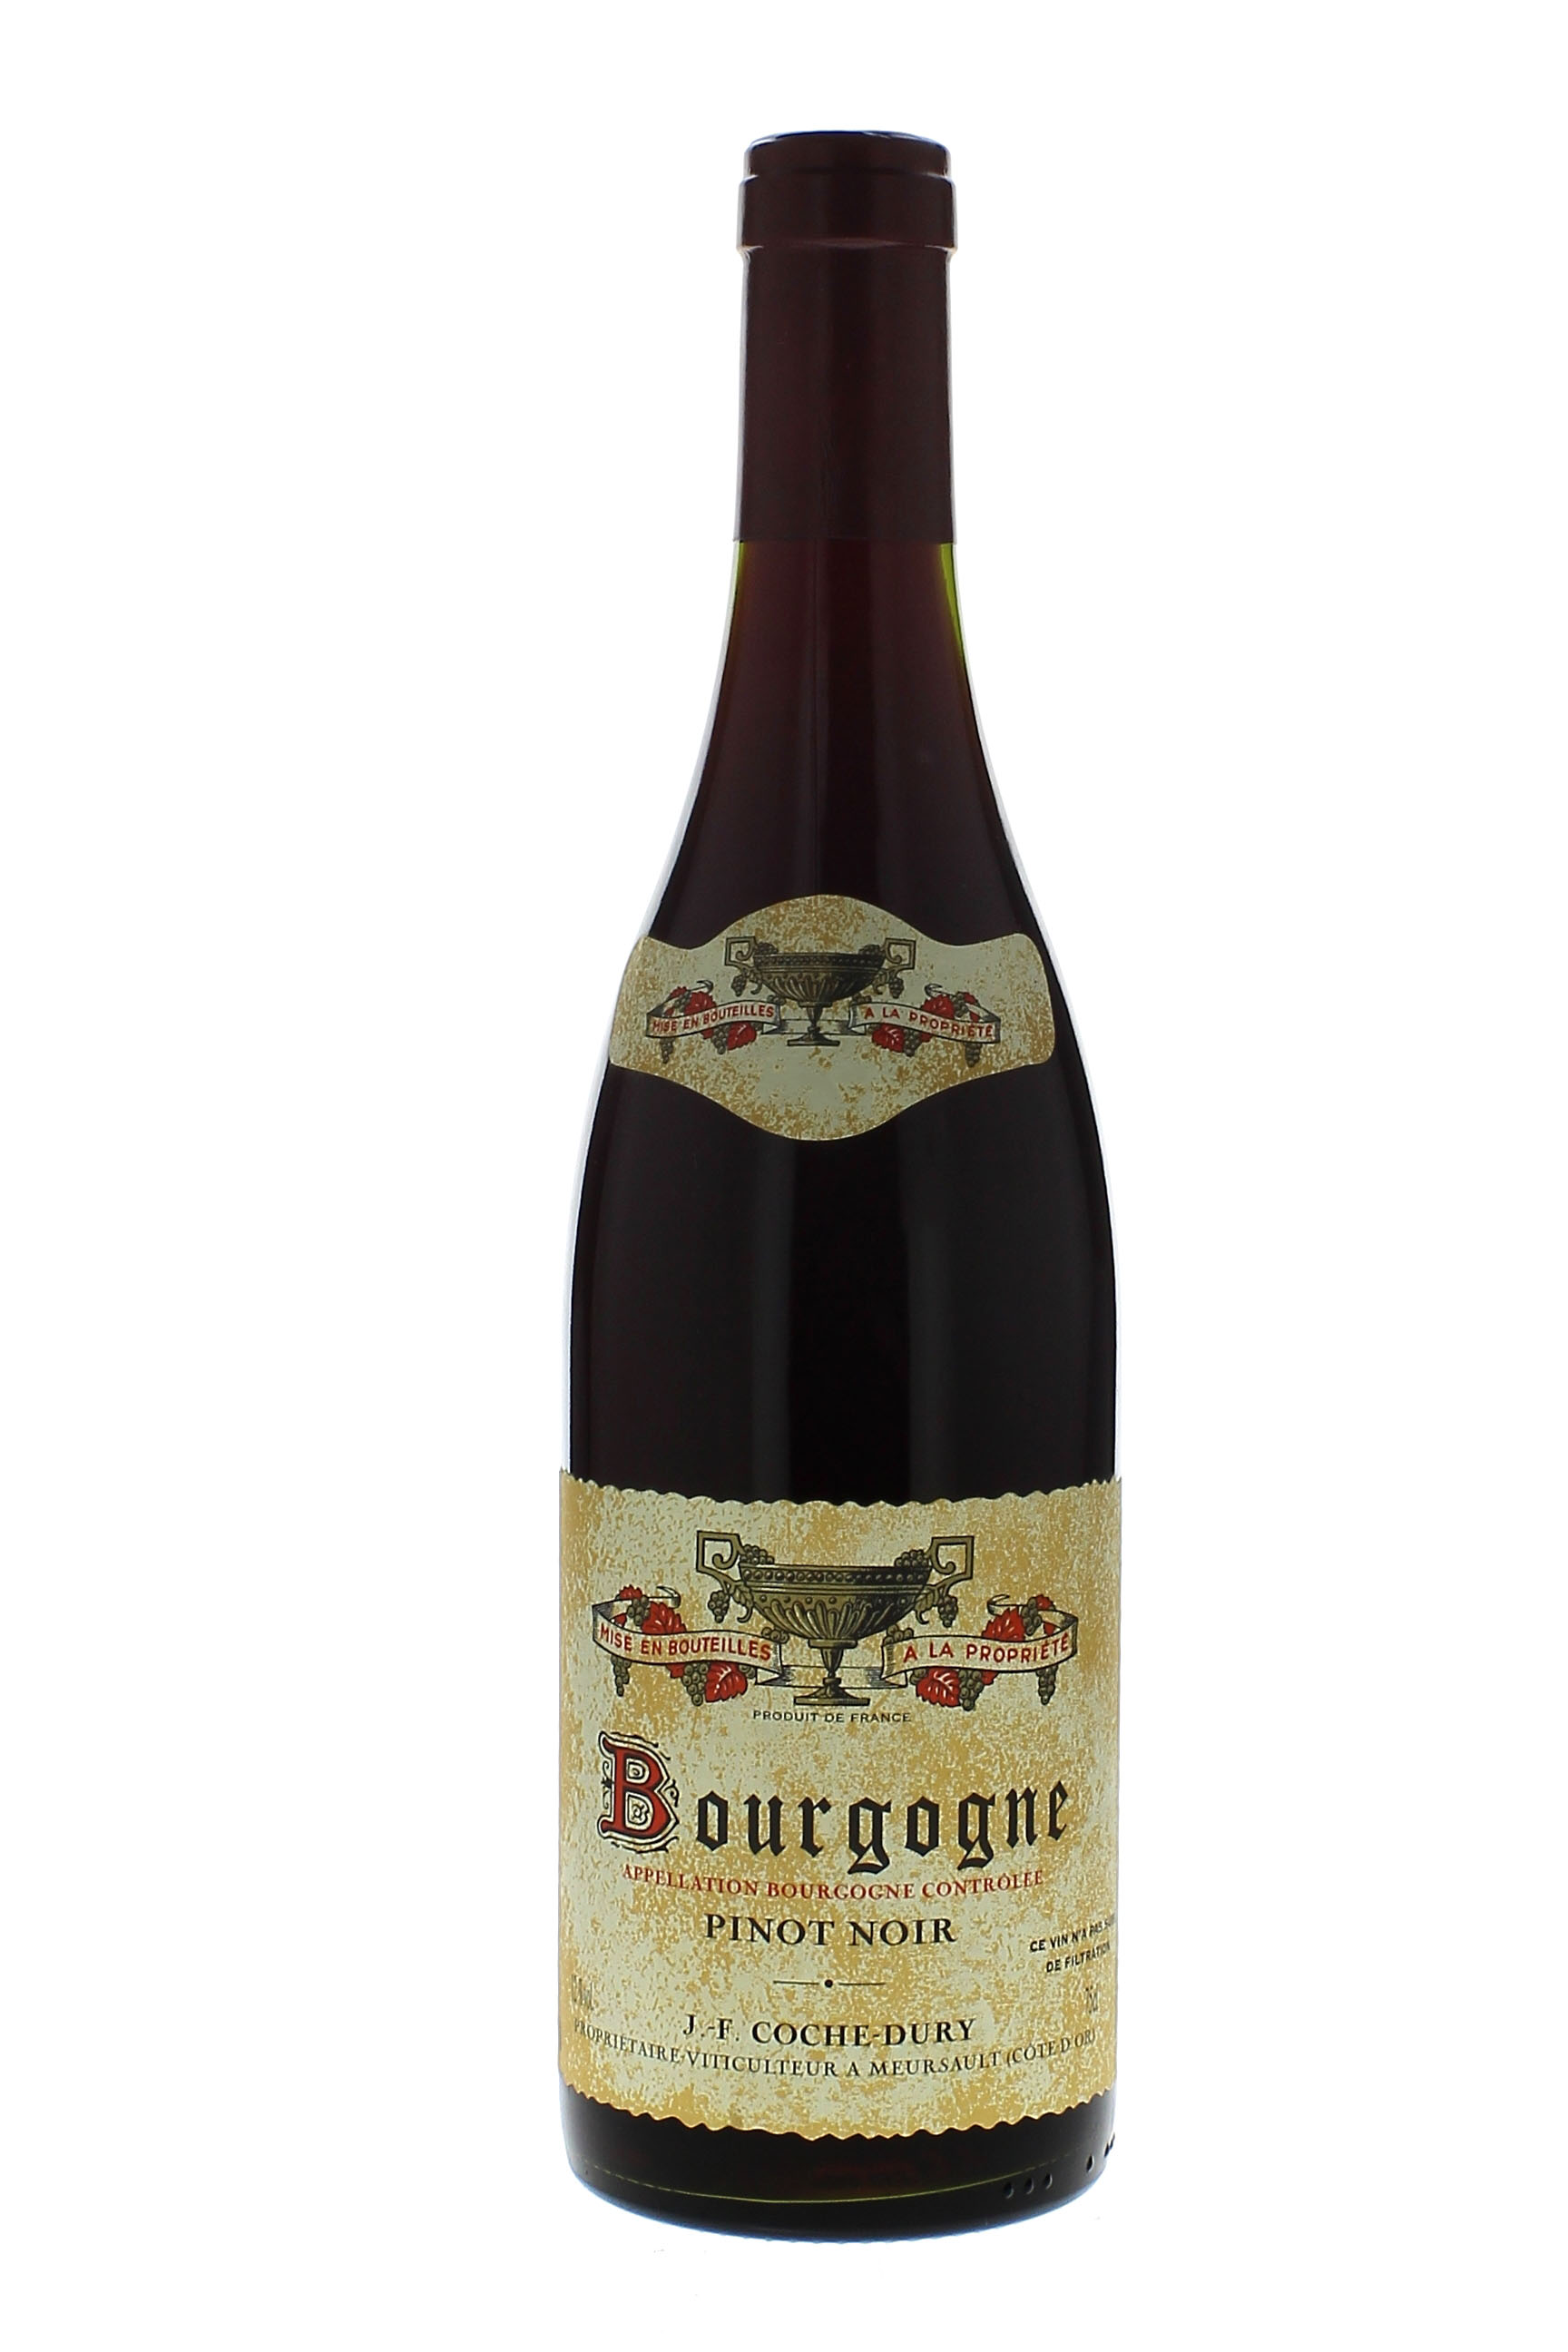 Bourgogne 2015 Domaine COCHE-DURY, Bourgogne rouge